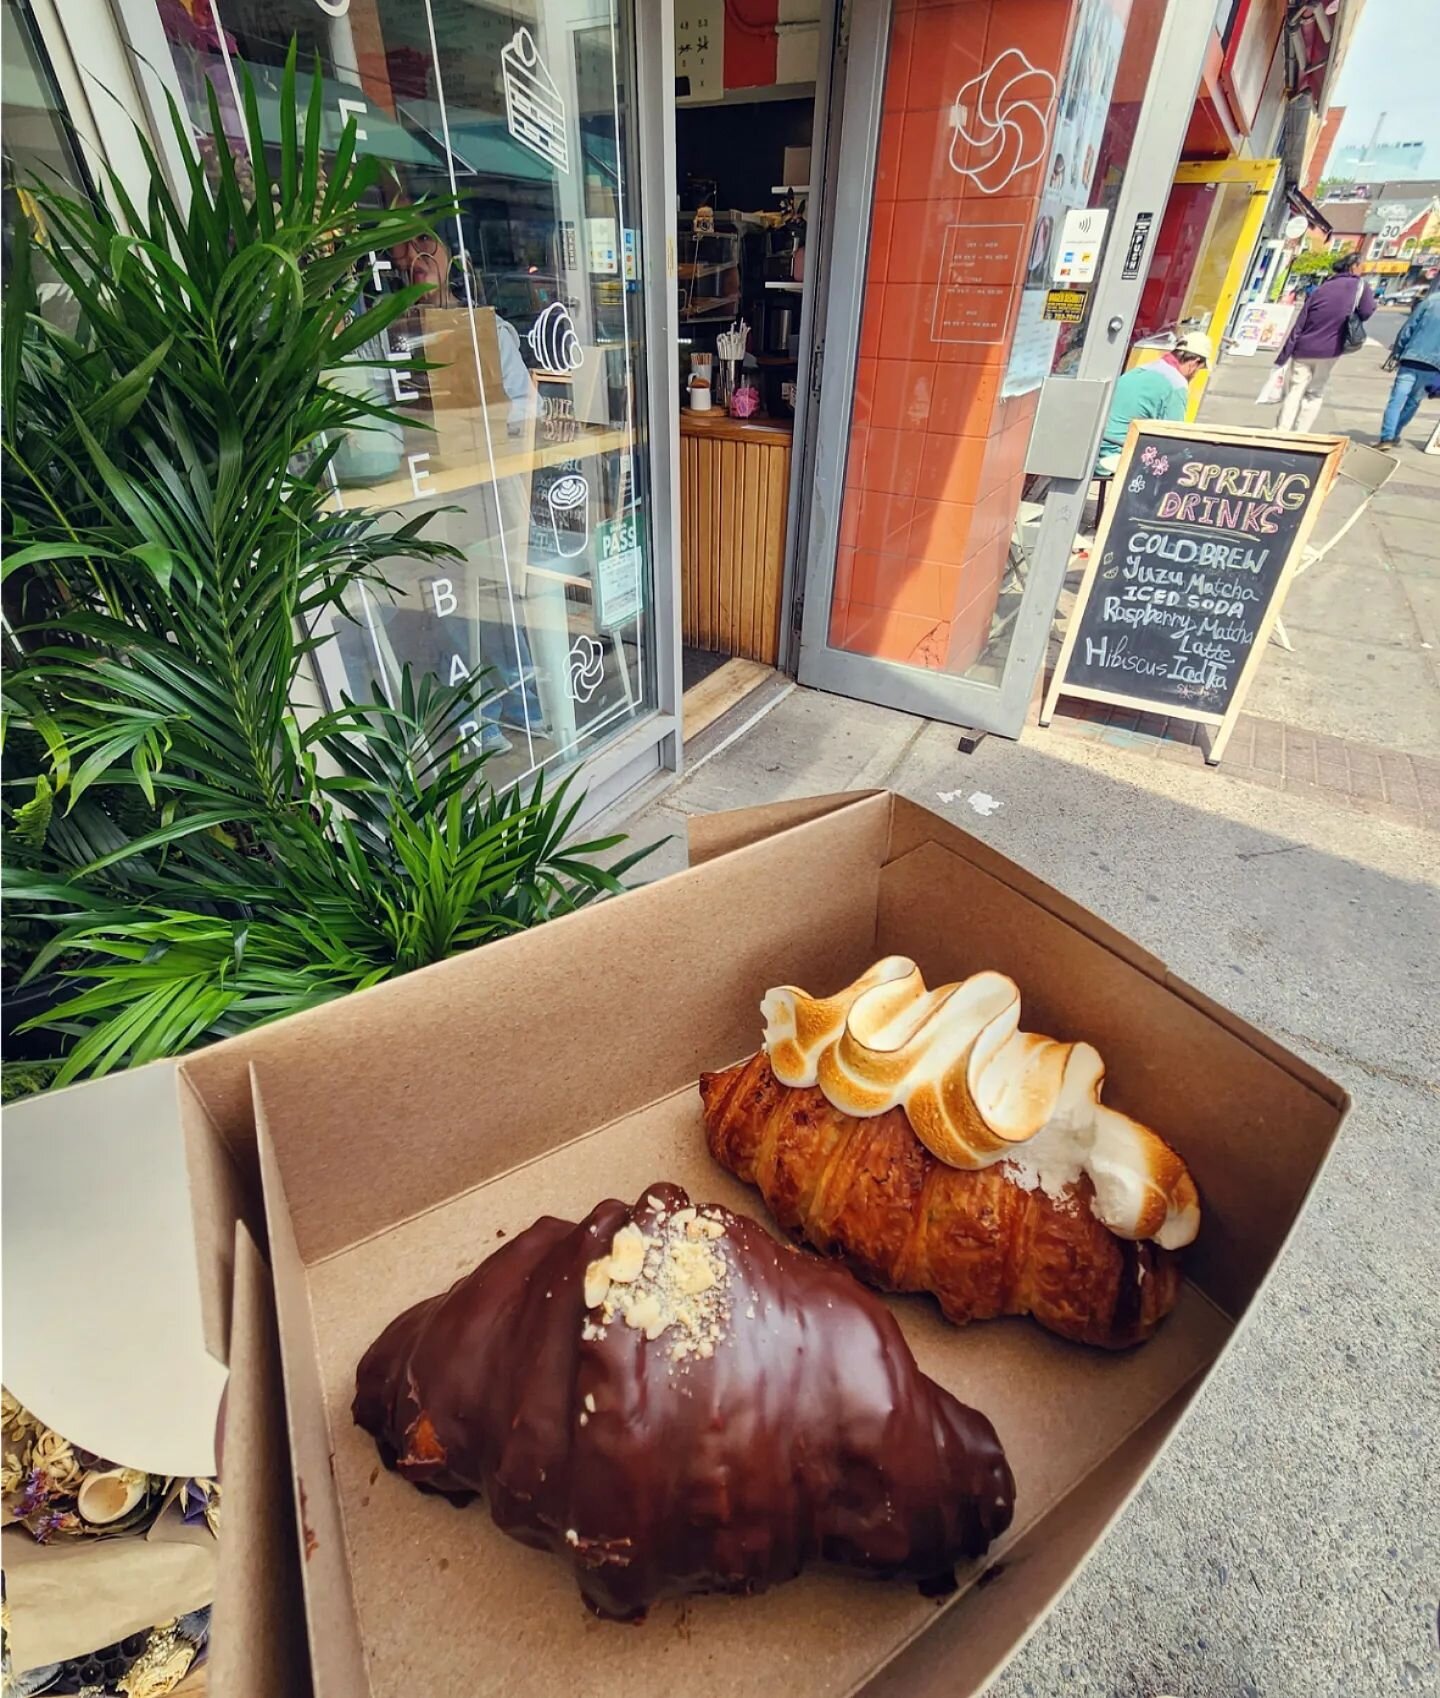 A couple of croissants to-go 🥐✨️ @littlepebblesto 💖
.
.
.
.
.

#food #foodie #foodpics #foodporn #yelpelite #yelp #millennial #brampton #pastry #croissant #bakery #dessert #mississauga #toronto #torontofood #lifestyle